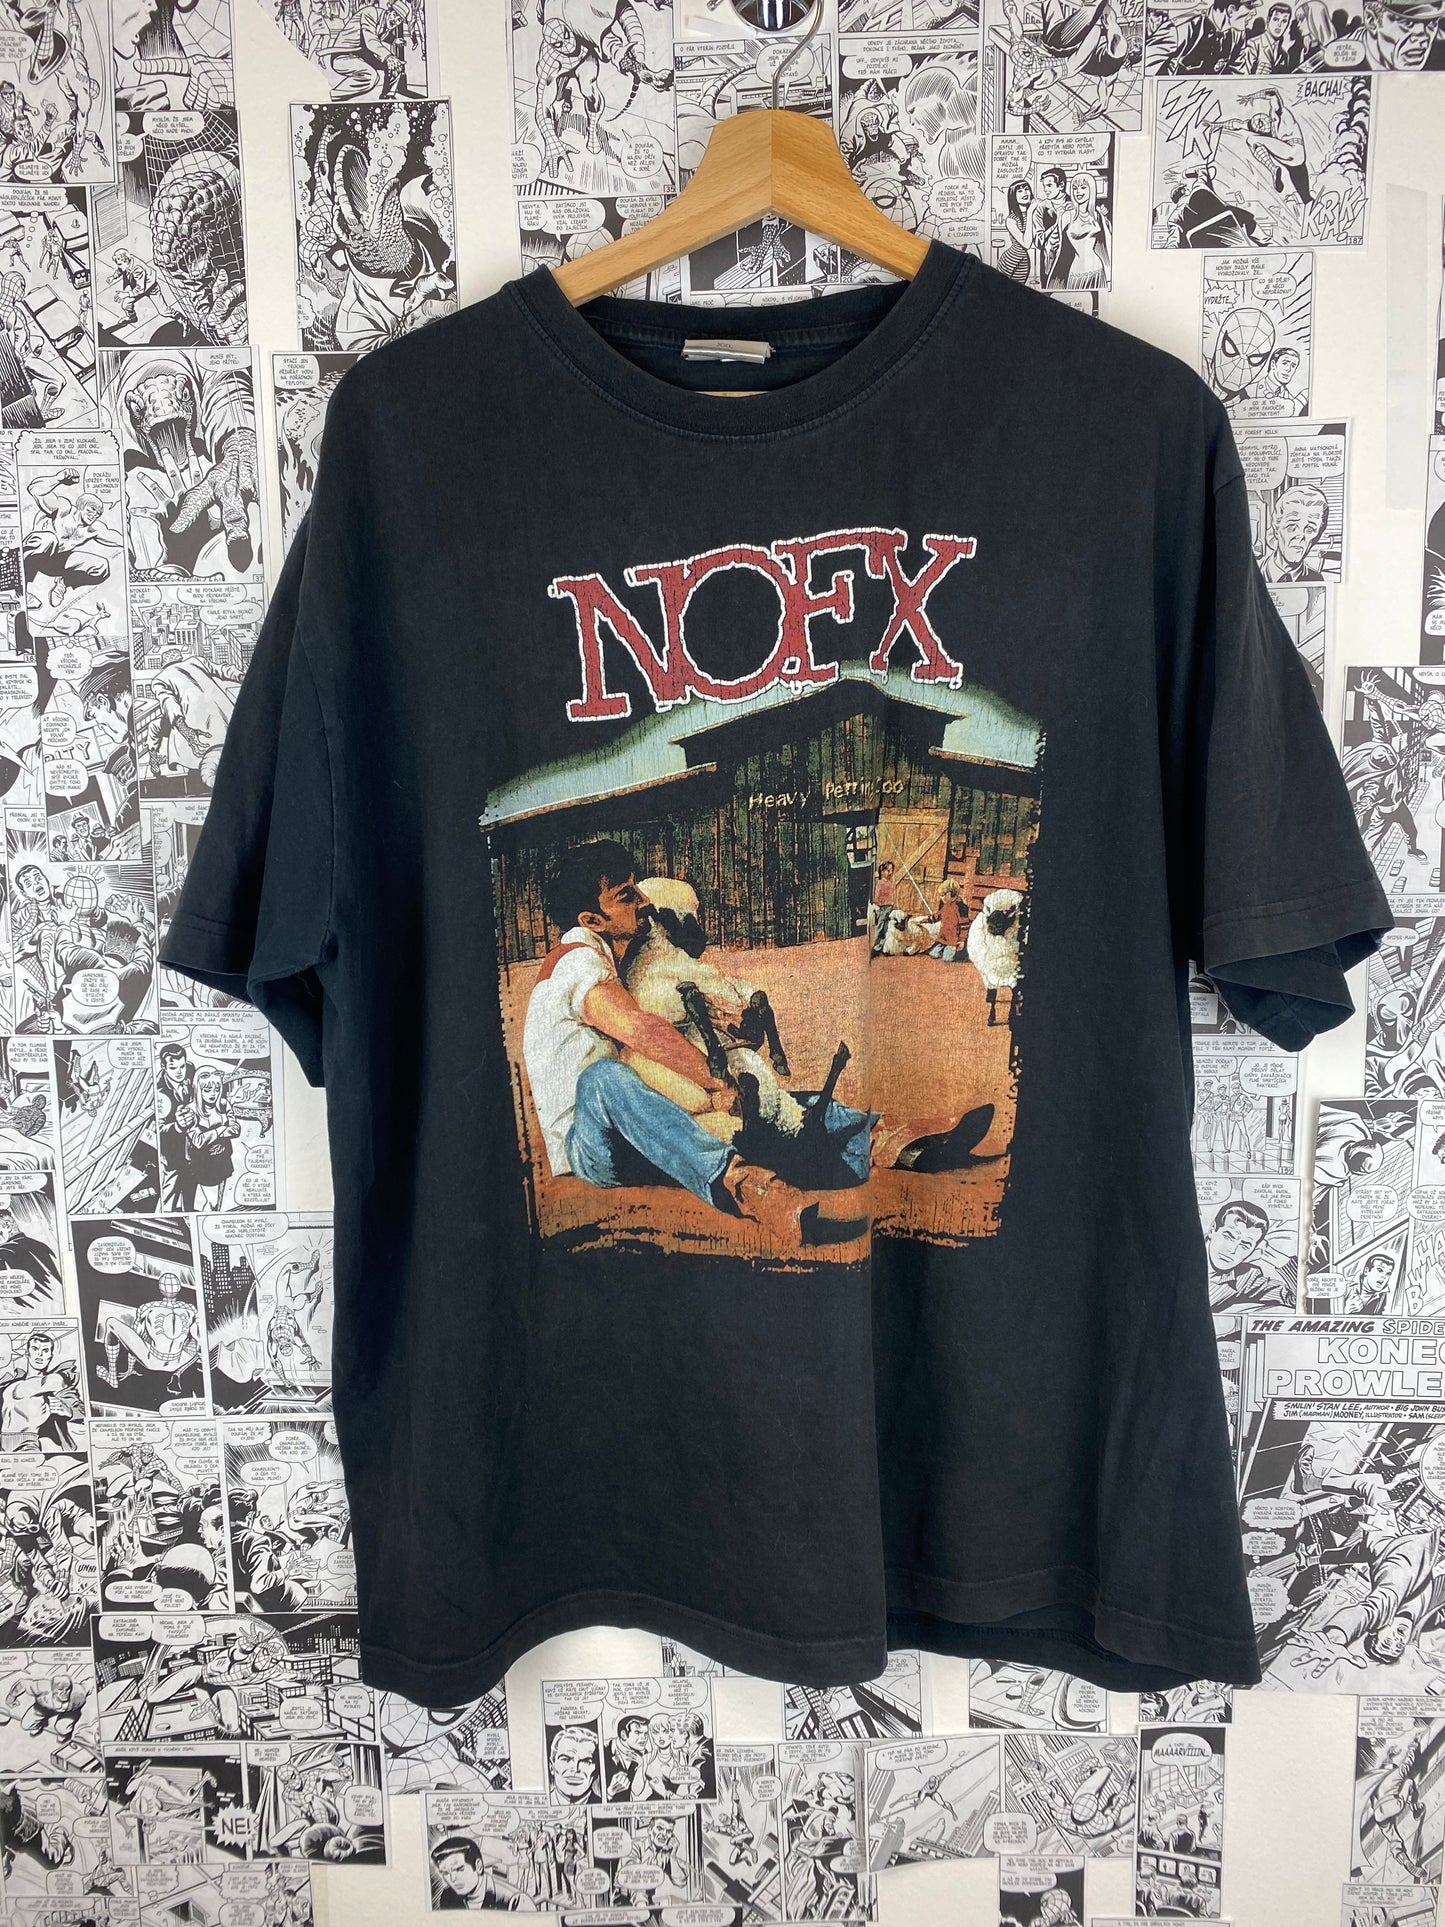 Vintage NOFX “Heavy Petting Zoo” t-shirt - size XXL